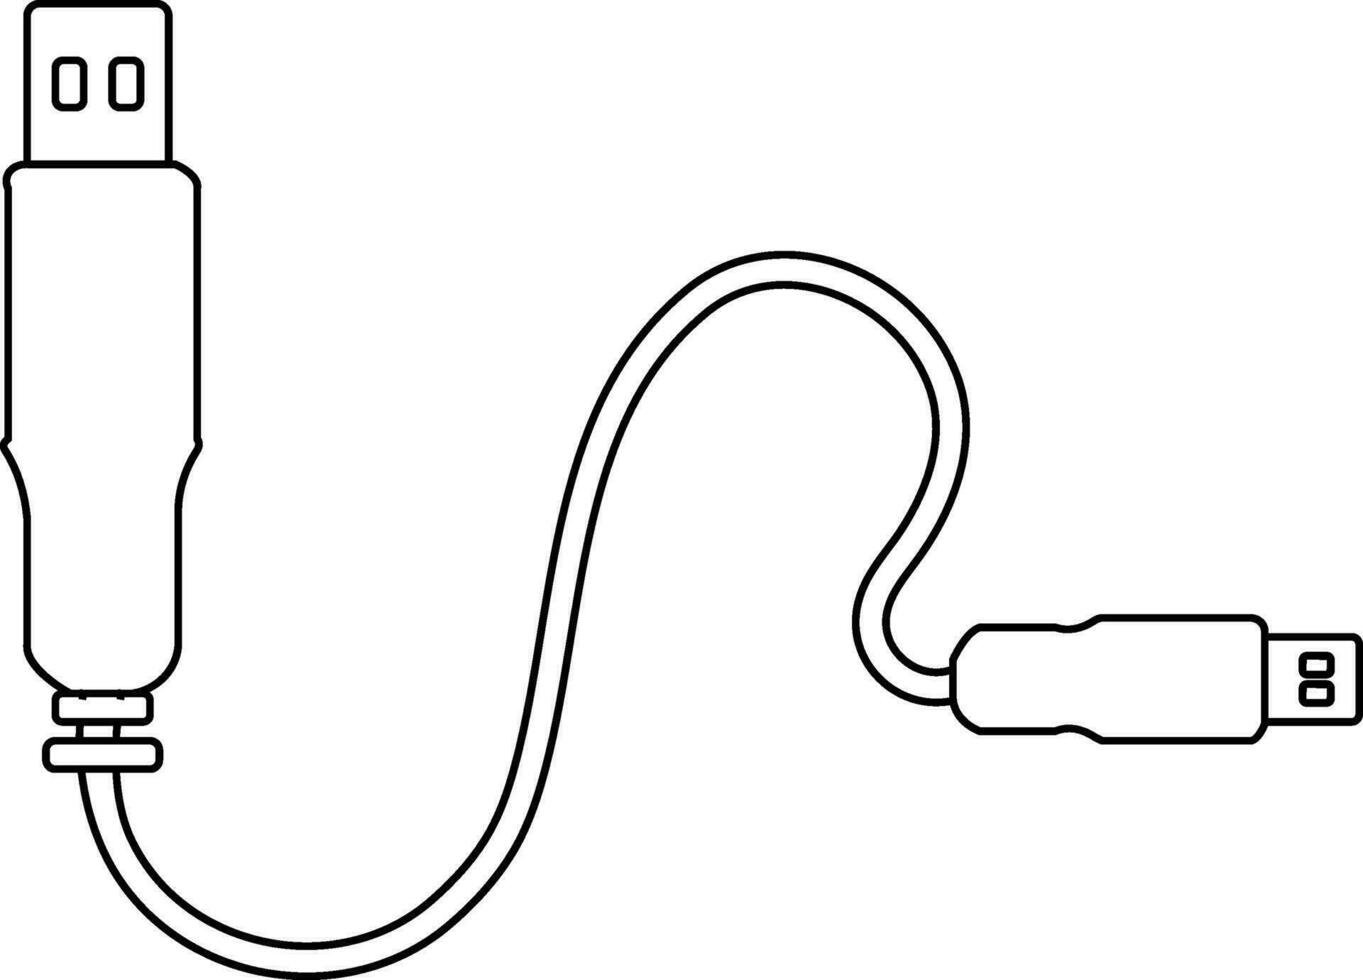 uSB kabel- i svart linje konst. vektor